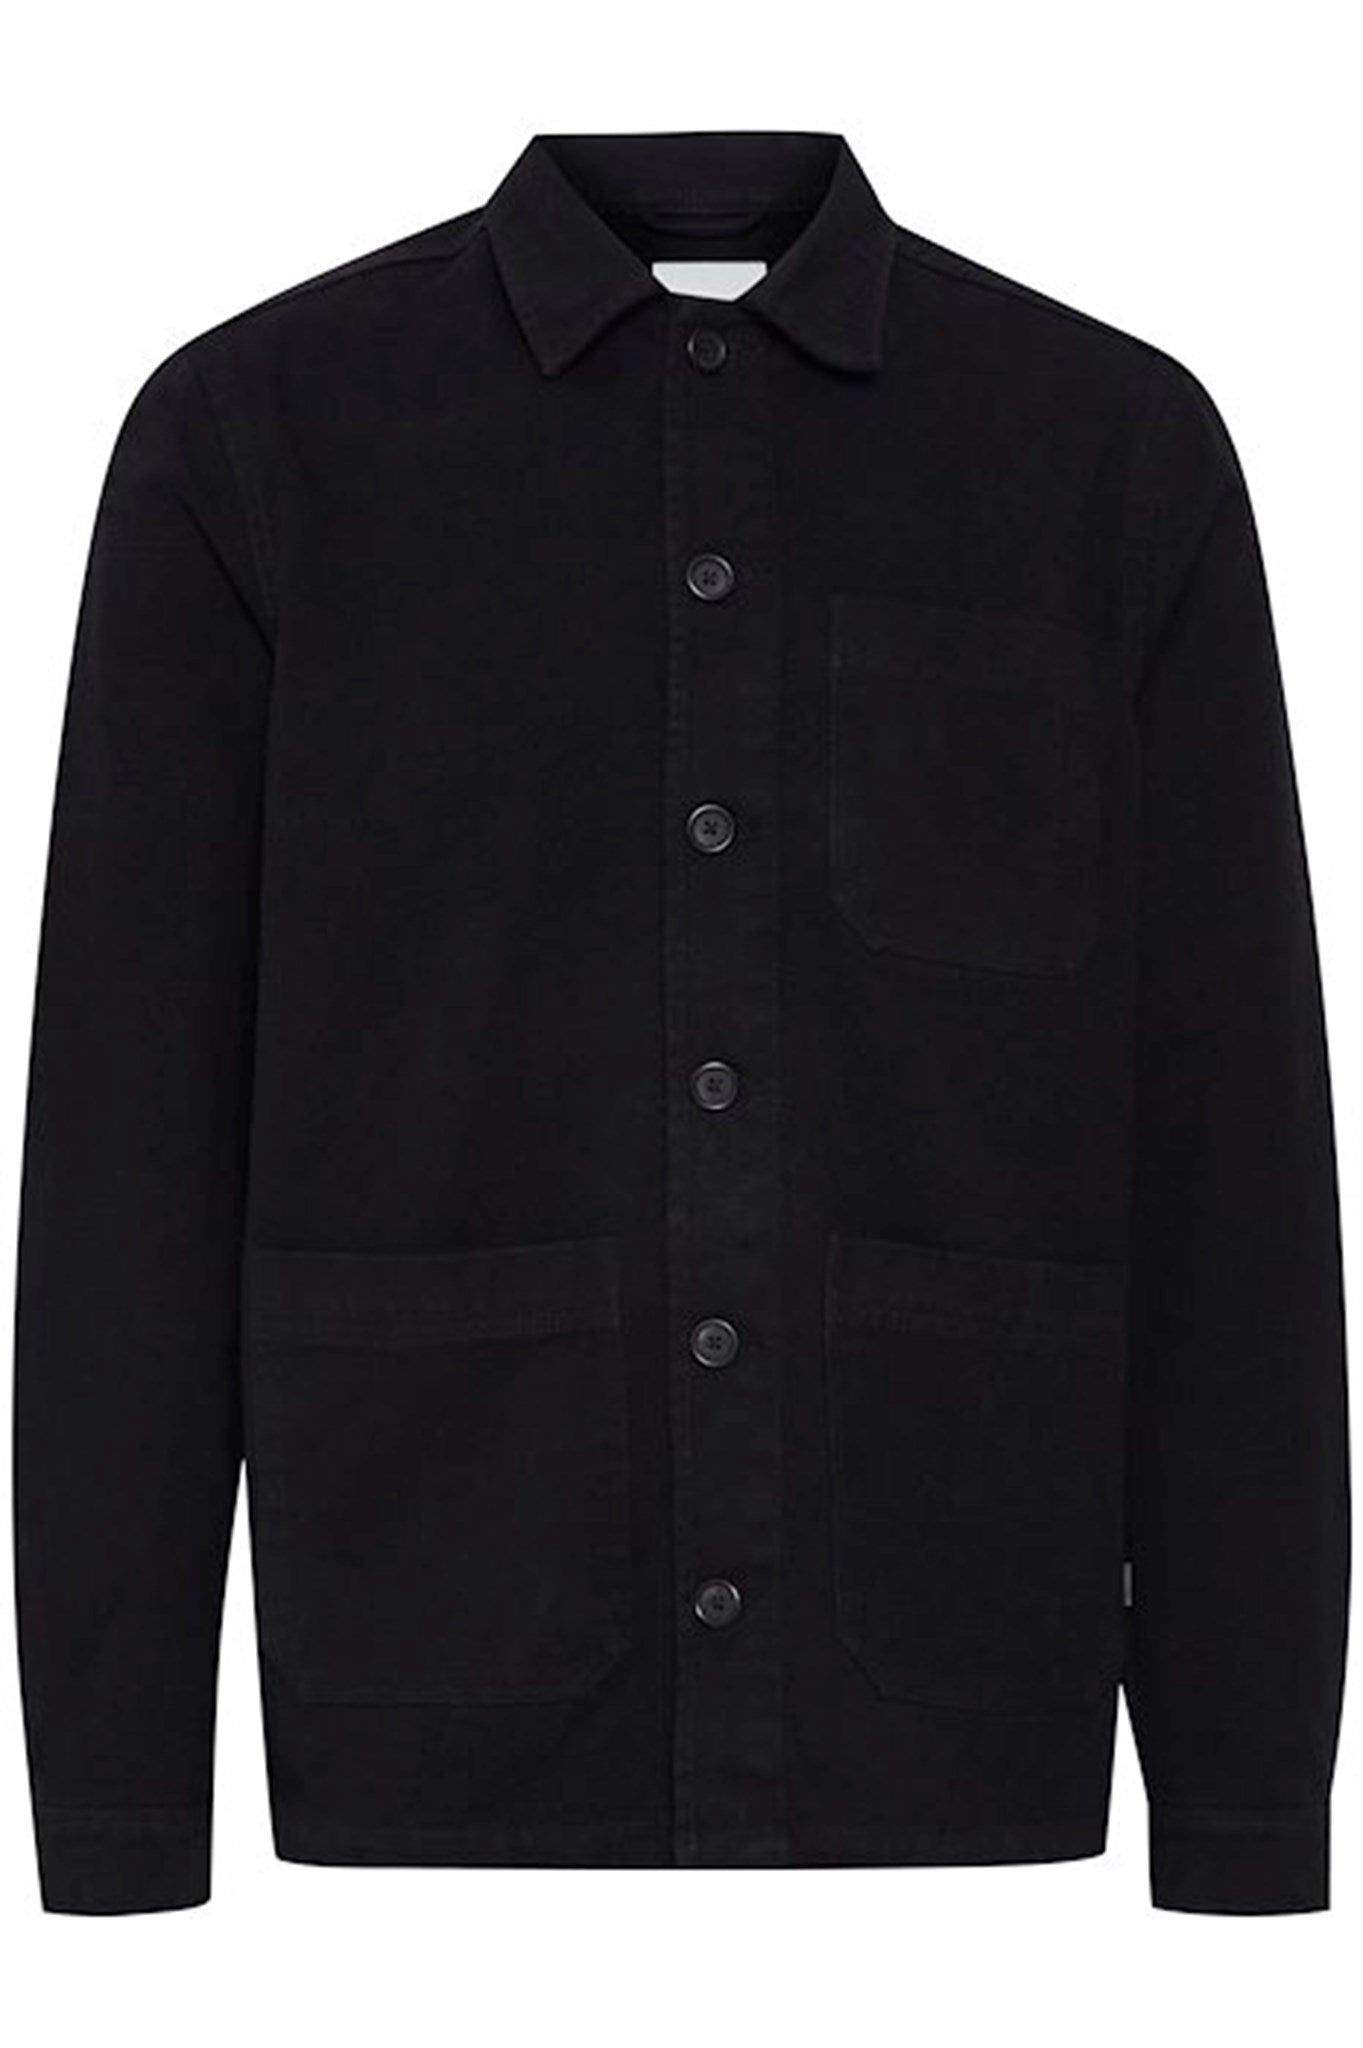 Wand Overshirt - True Black - Solid